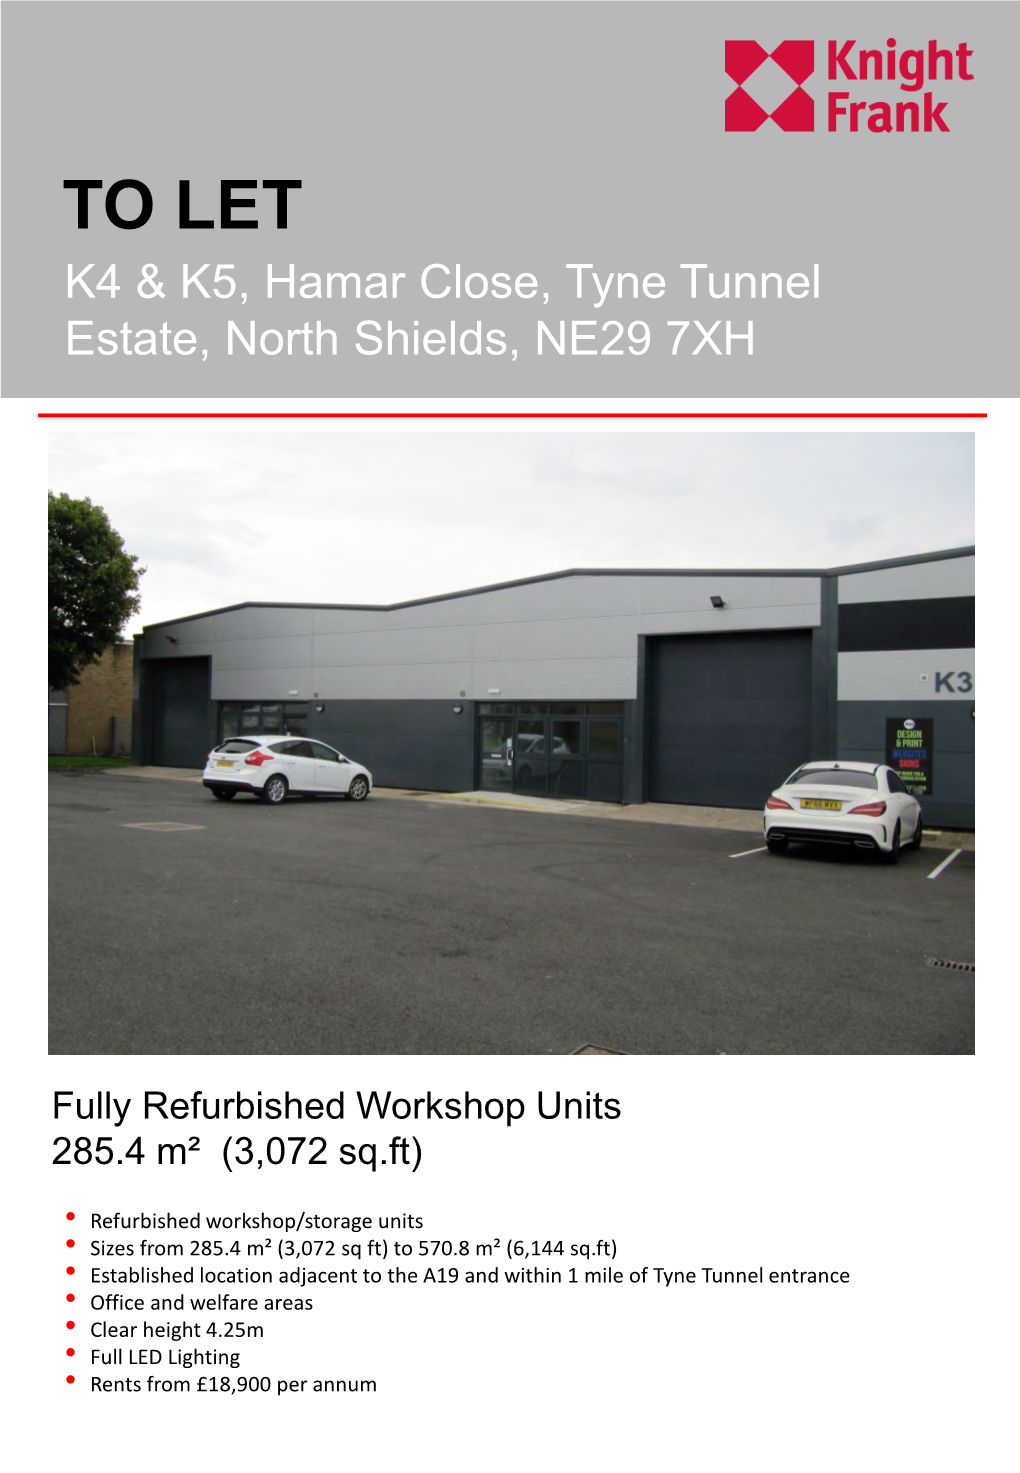 TO LET K4 & K5, Hamar Close, Tyne Tunnel Estate, North Shields, NE29 7XH